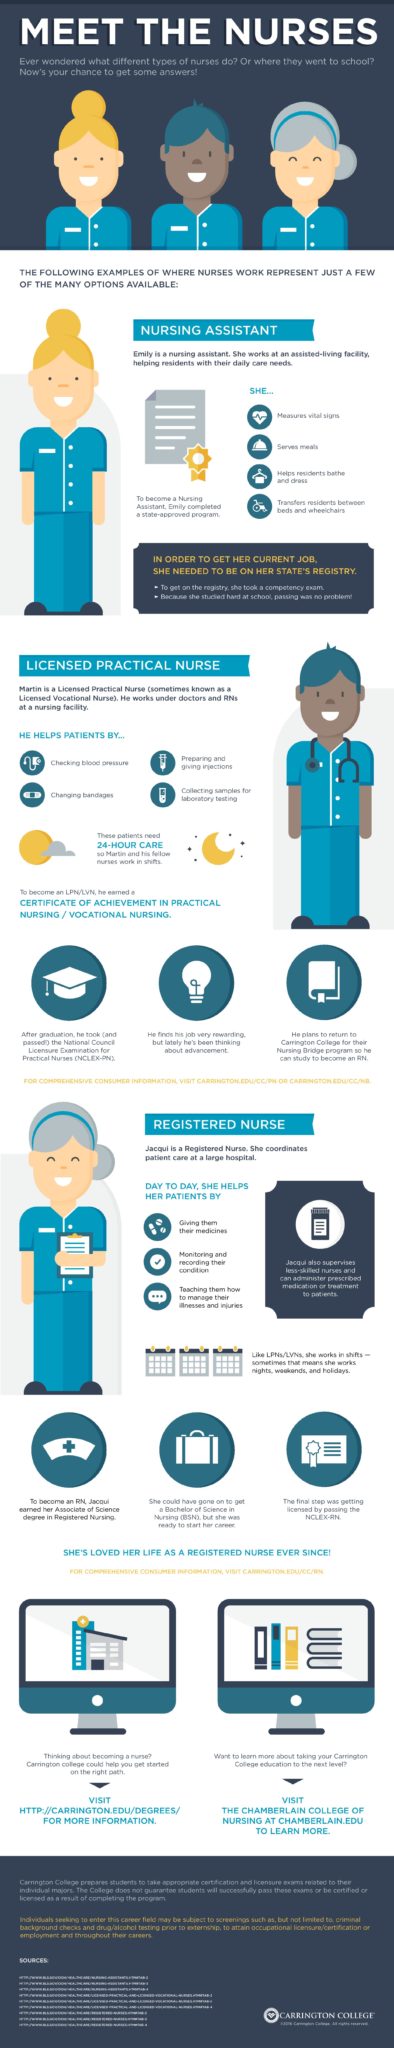 nursing jobs explained infographic 